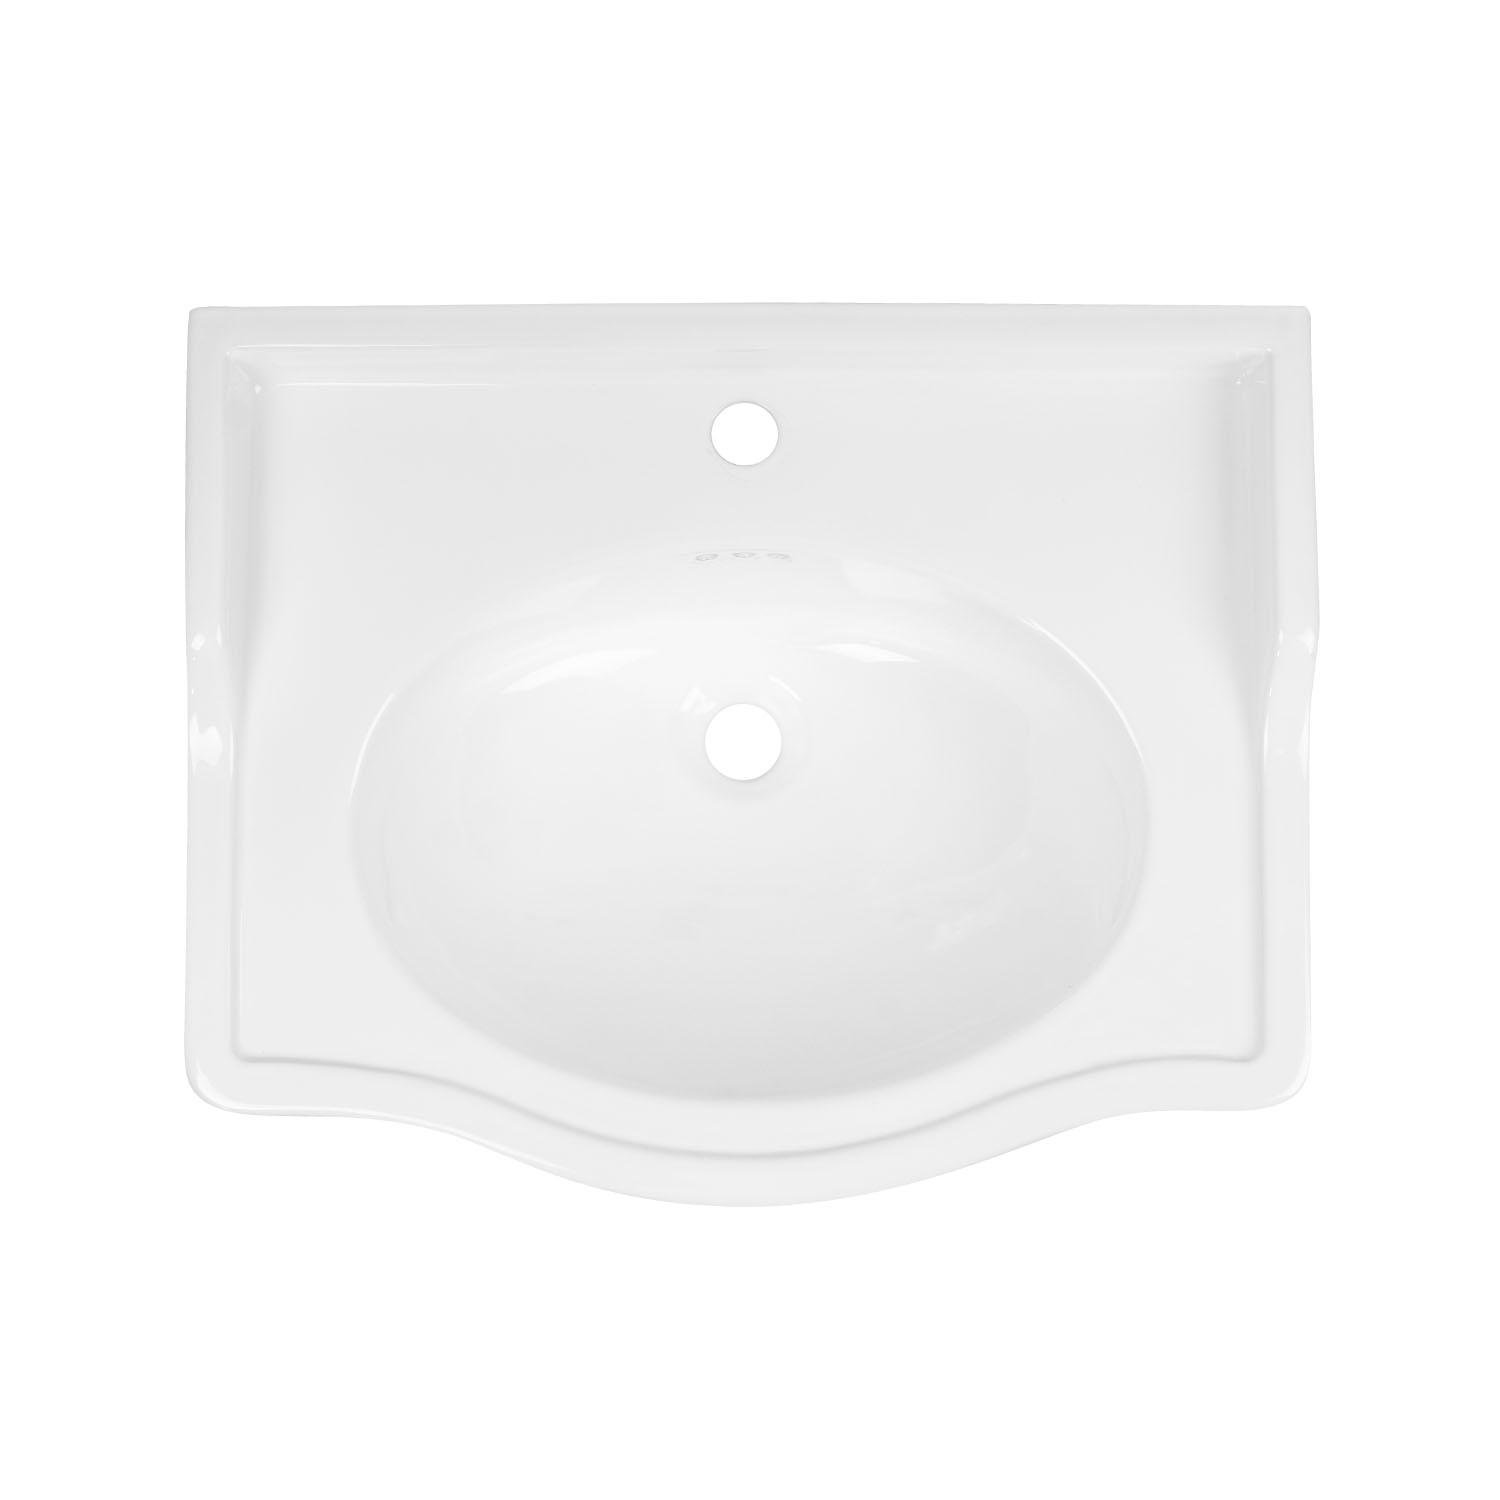 Modern 24 inch 62 cm bathroom freestanding rectangle ceramic pedestal sink 4